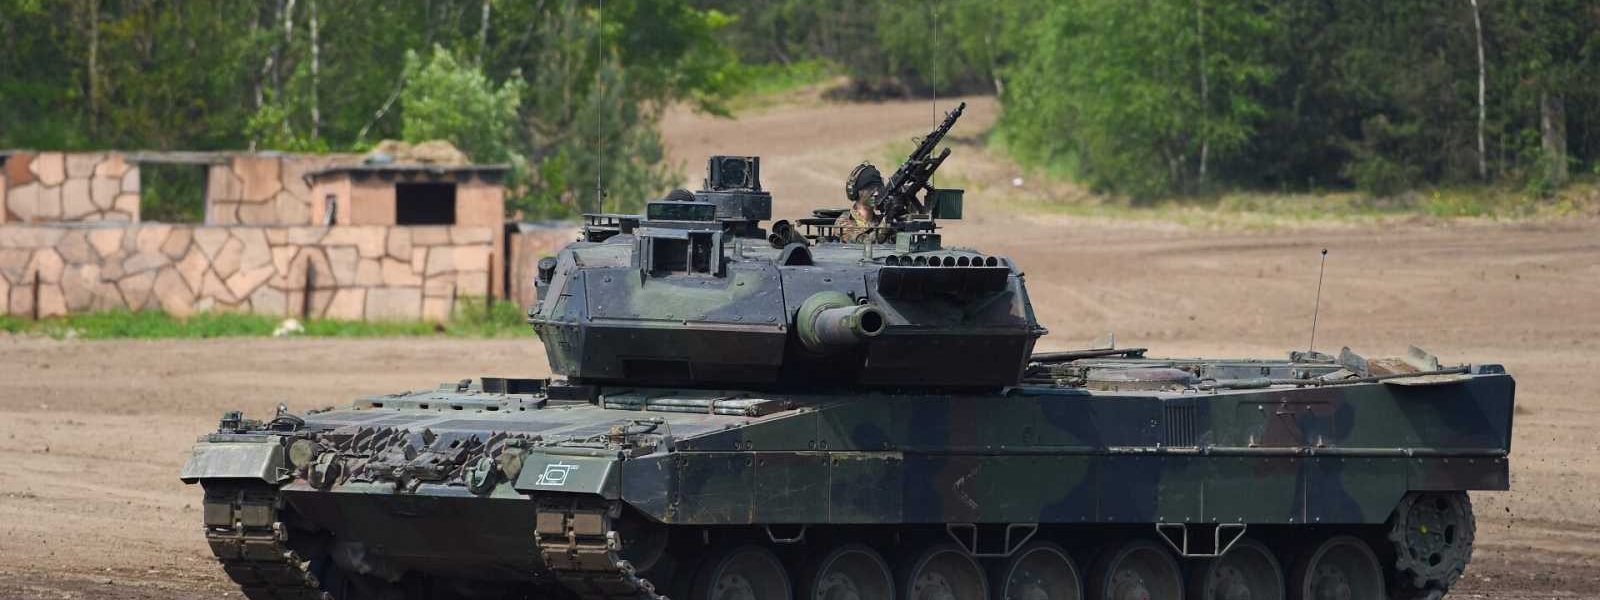 Alemania confirma que si pondrá a disposición tanques a Ucrania